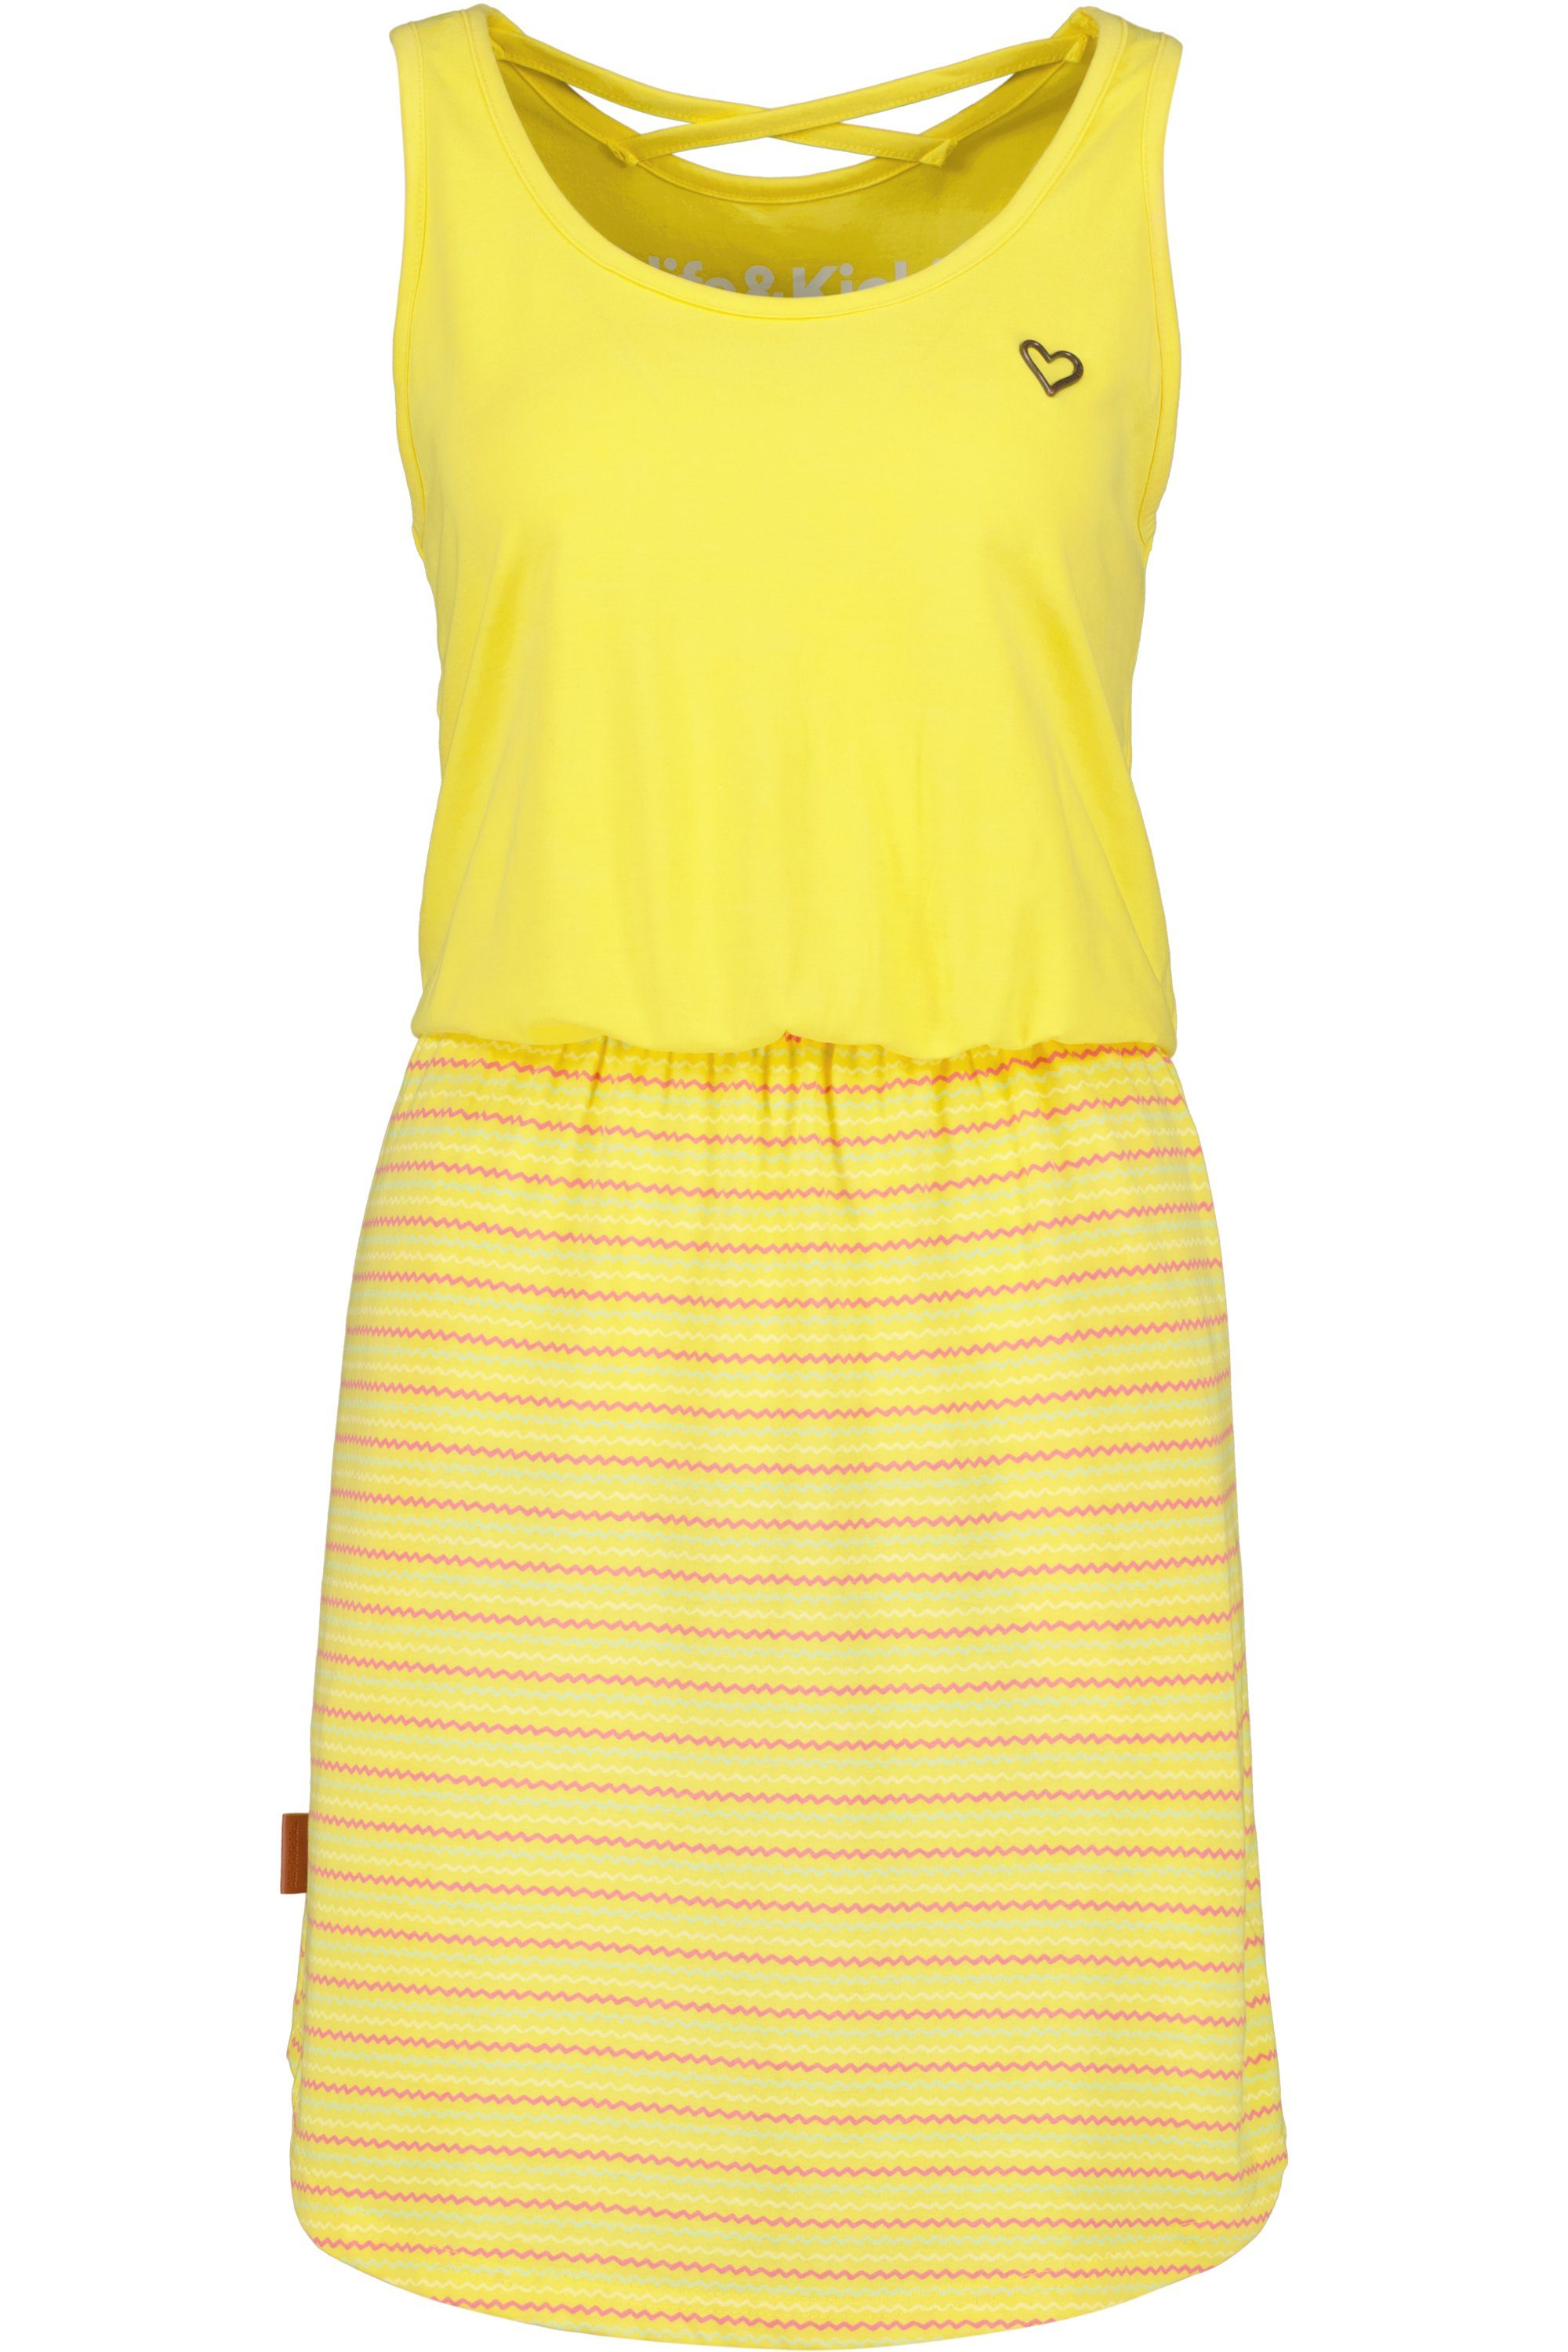 Alife & Kickin RosalieAK Damen Dress Kleid citron Jerseykleid Sommerkleid